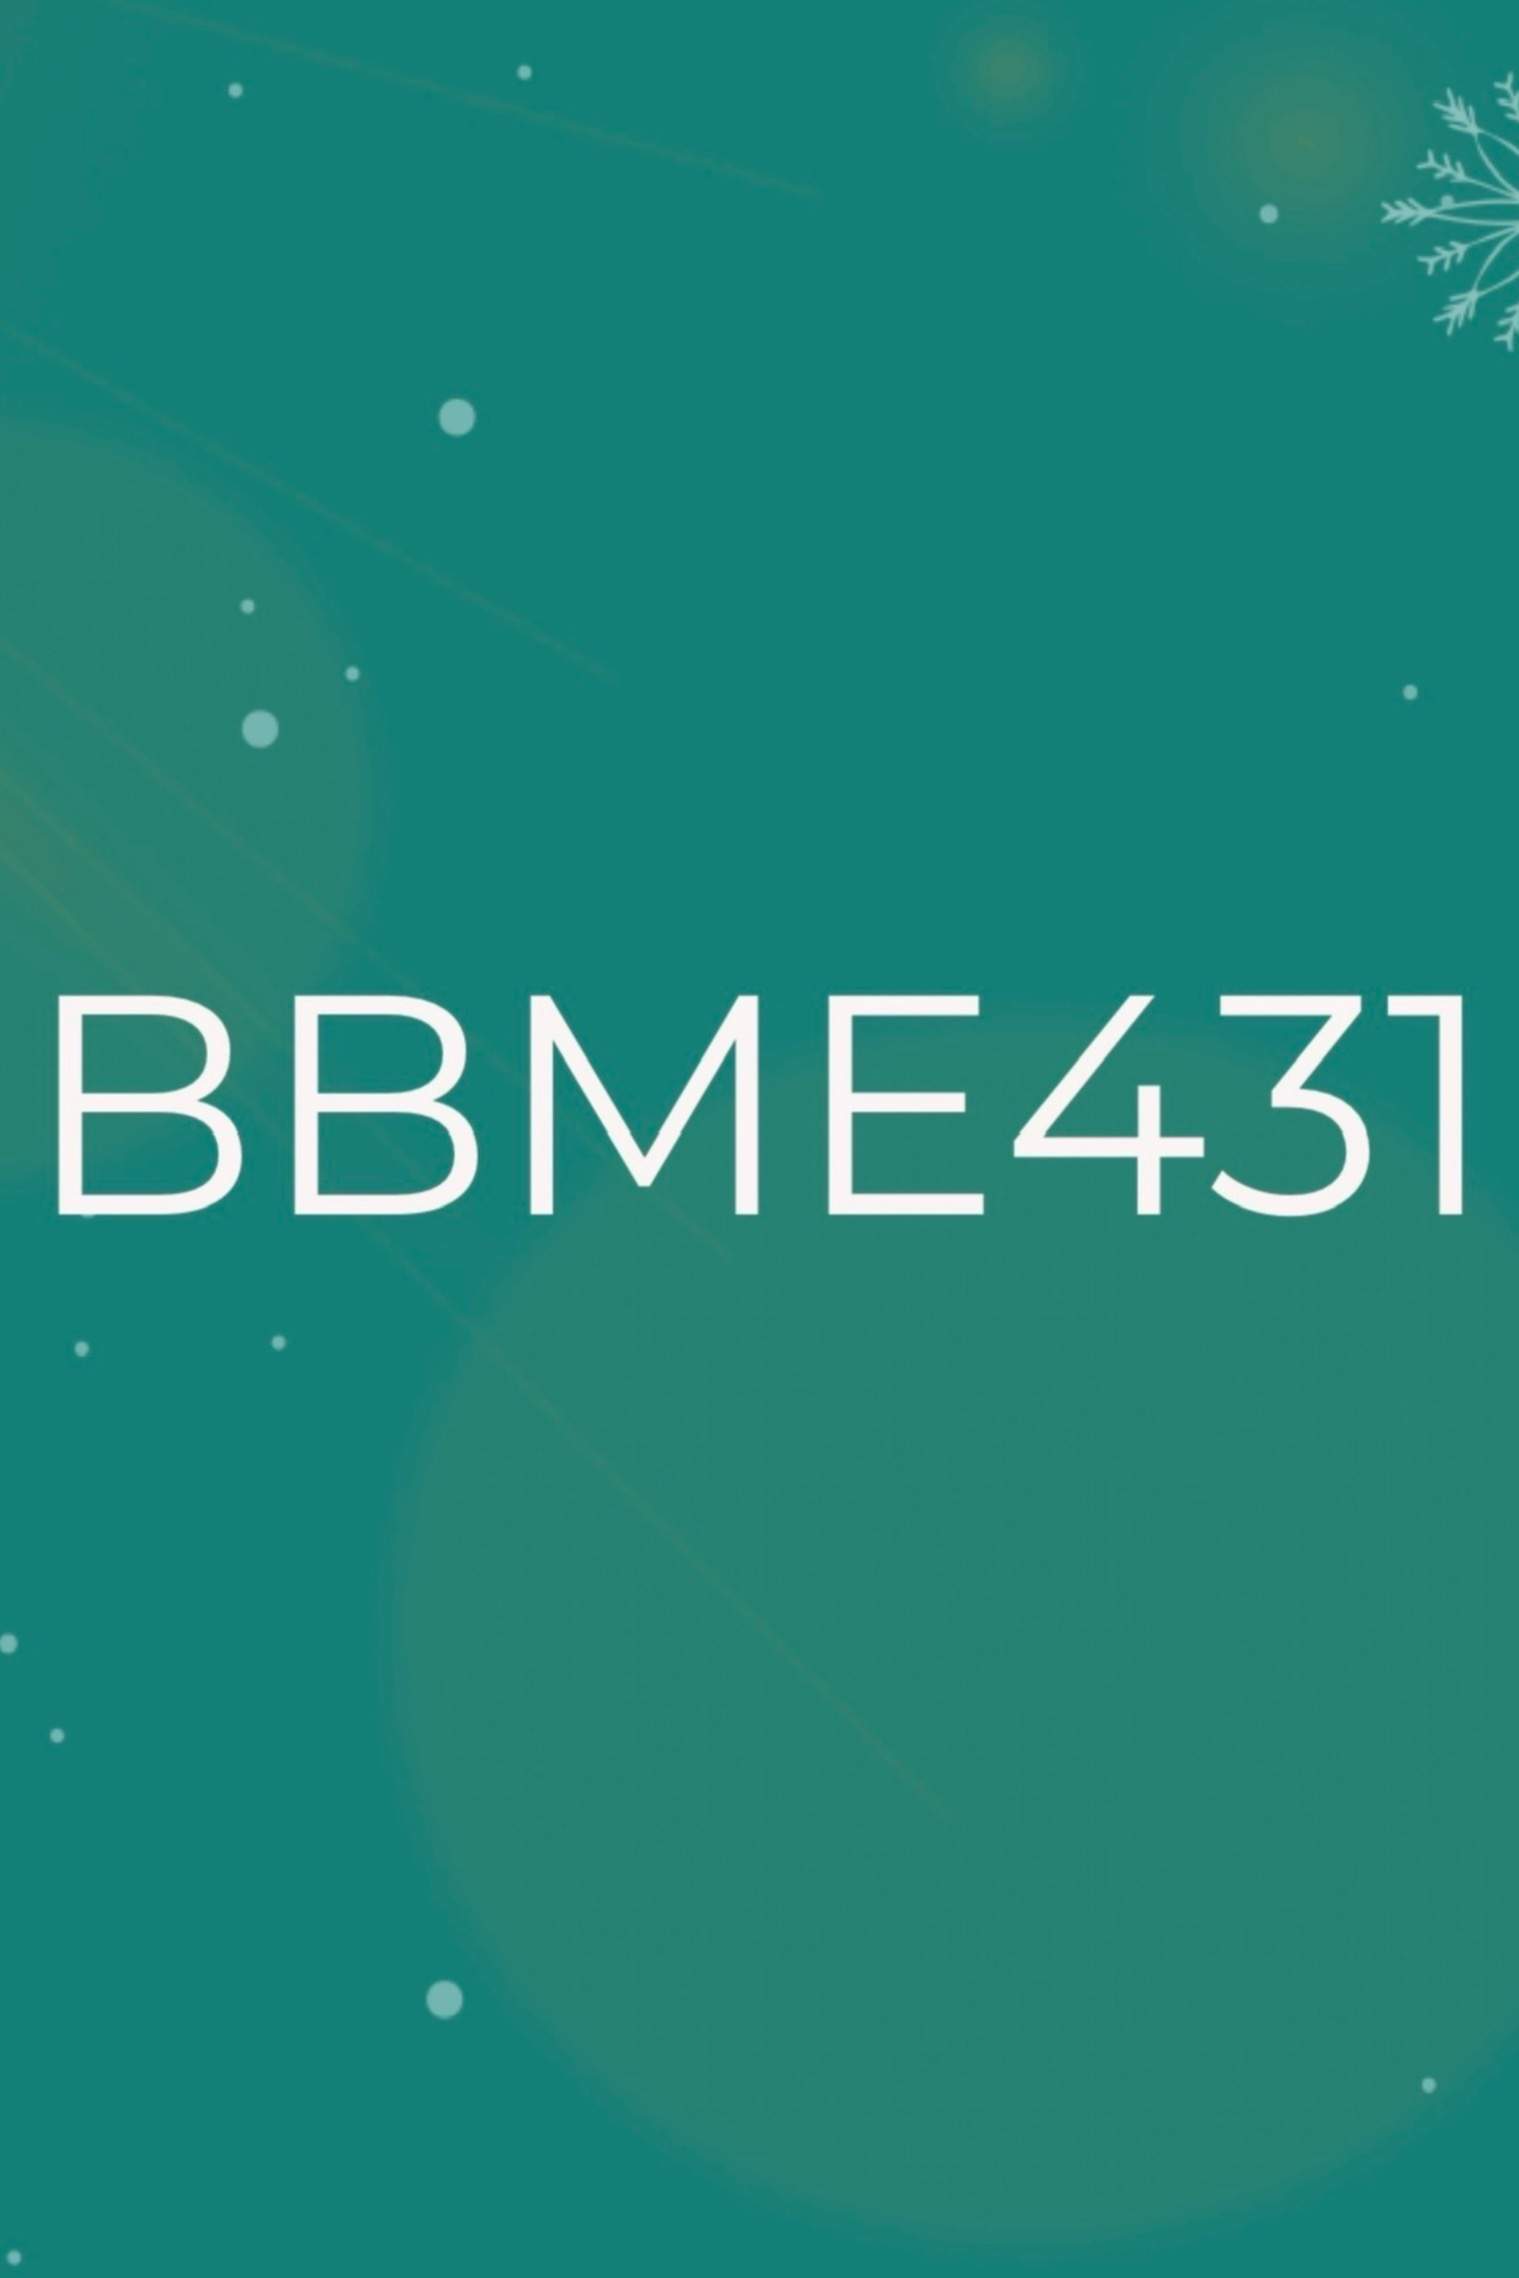 bbme431